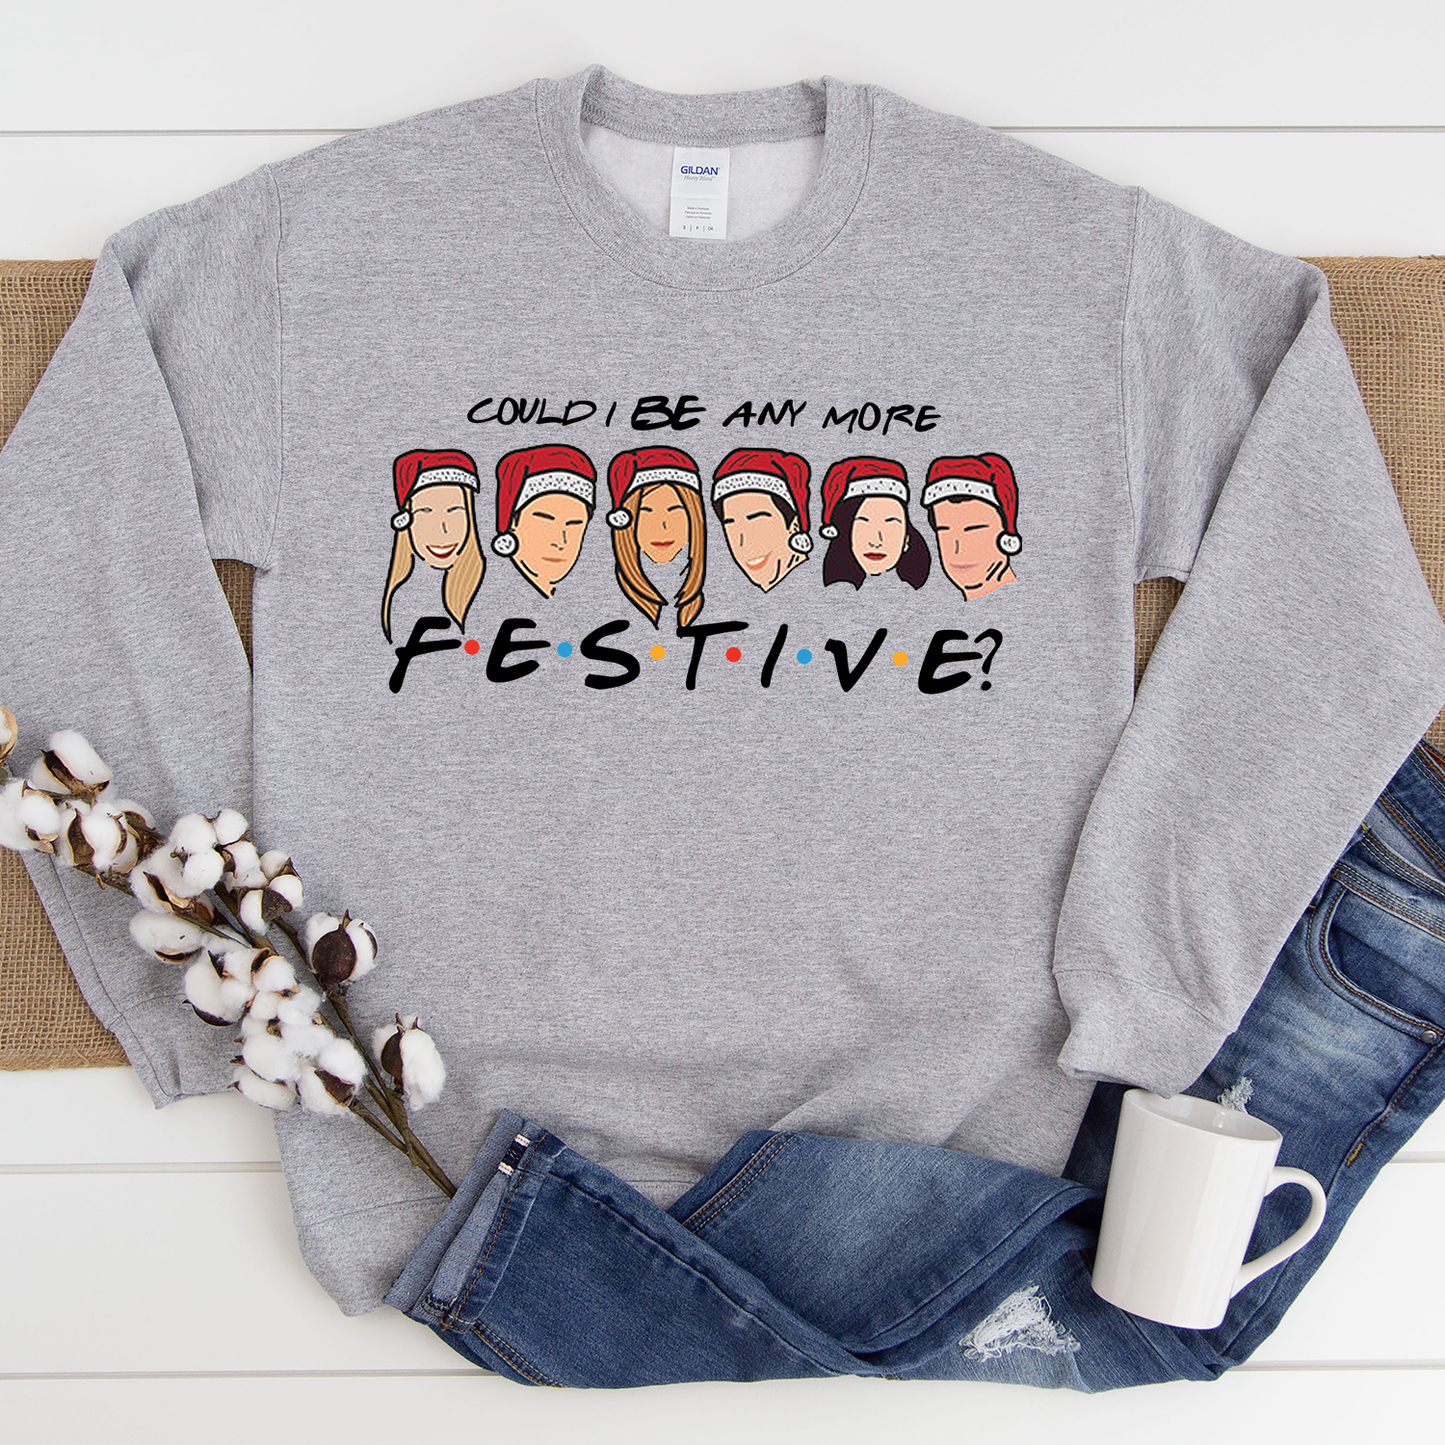 Could I BE anymore Festive? Funny Christmas Sweatshirt Xmas Jumper